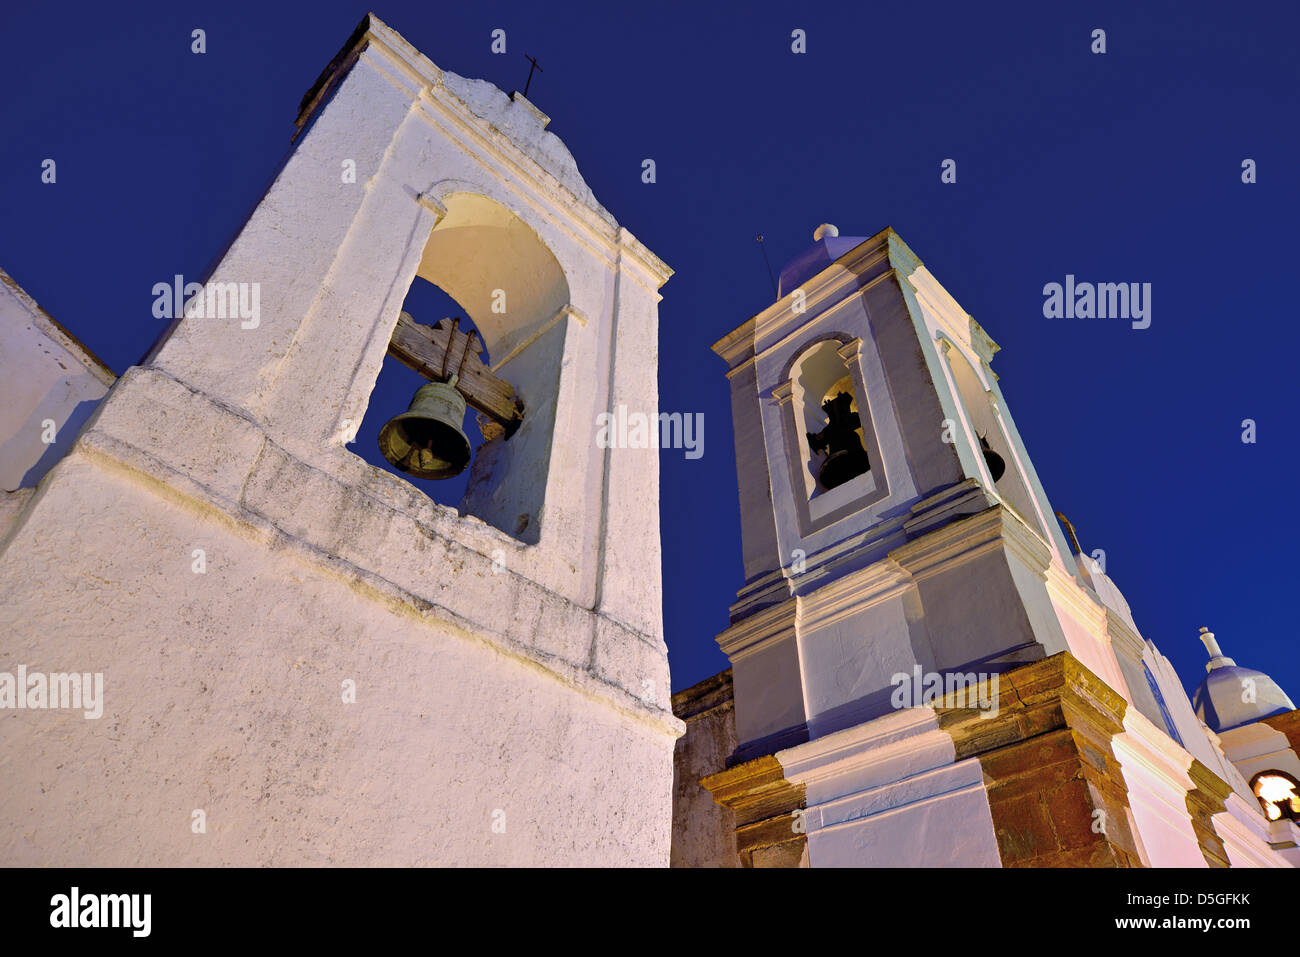 Portugal, Alentejo: Bell towers of the Fresco Museum and parish church Nossa Senhora da Lagoa at night Stock Photo